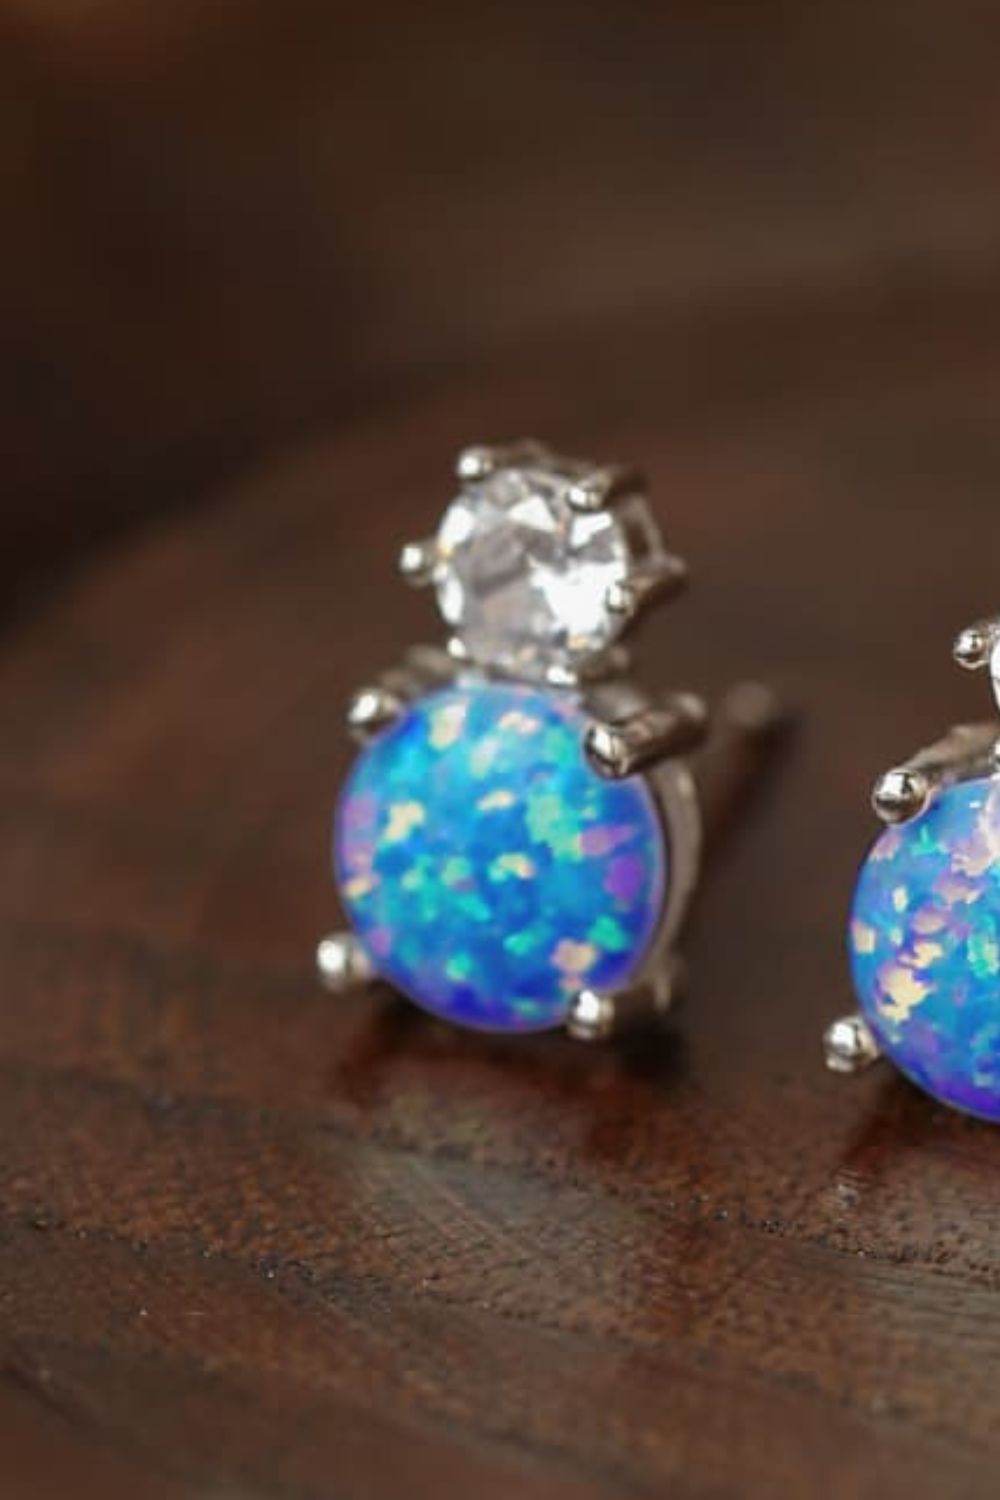 4-Prong Opal Stud Earrings - Shah S. Sahota